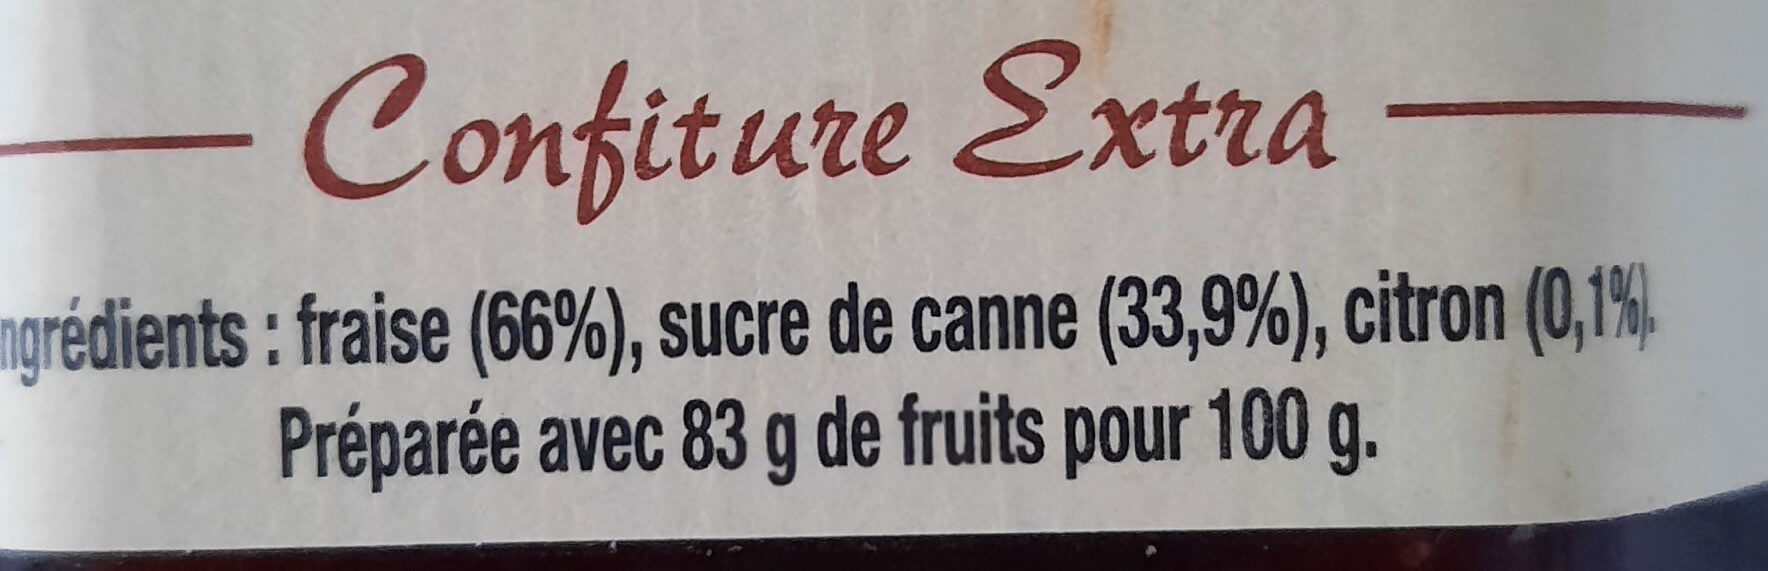 Fraise Confiture Extra - Ingredientes - fr